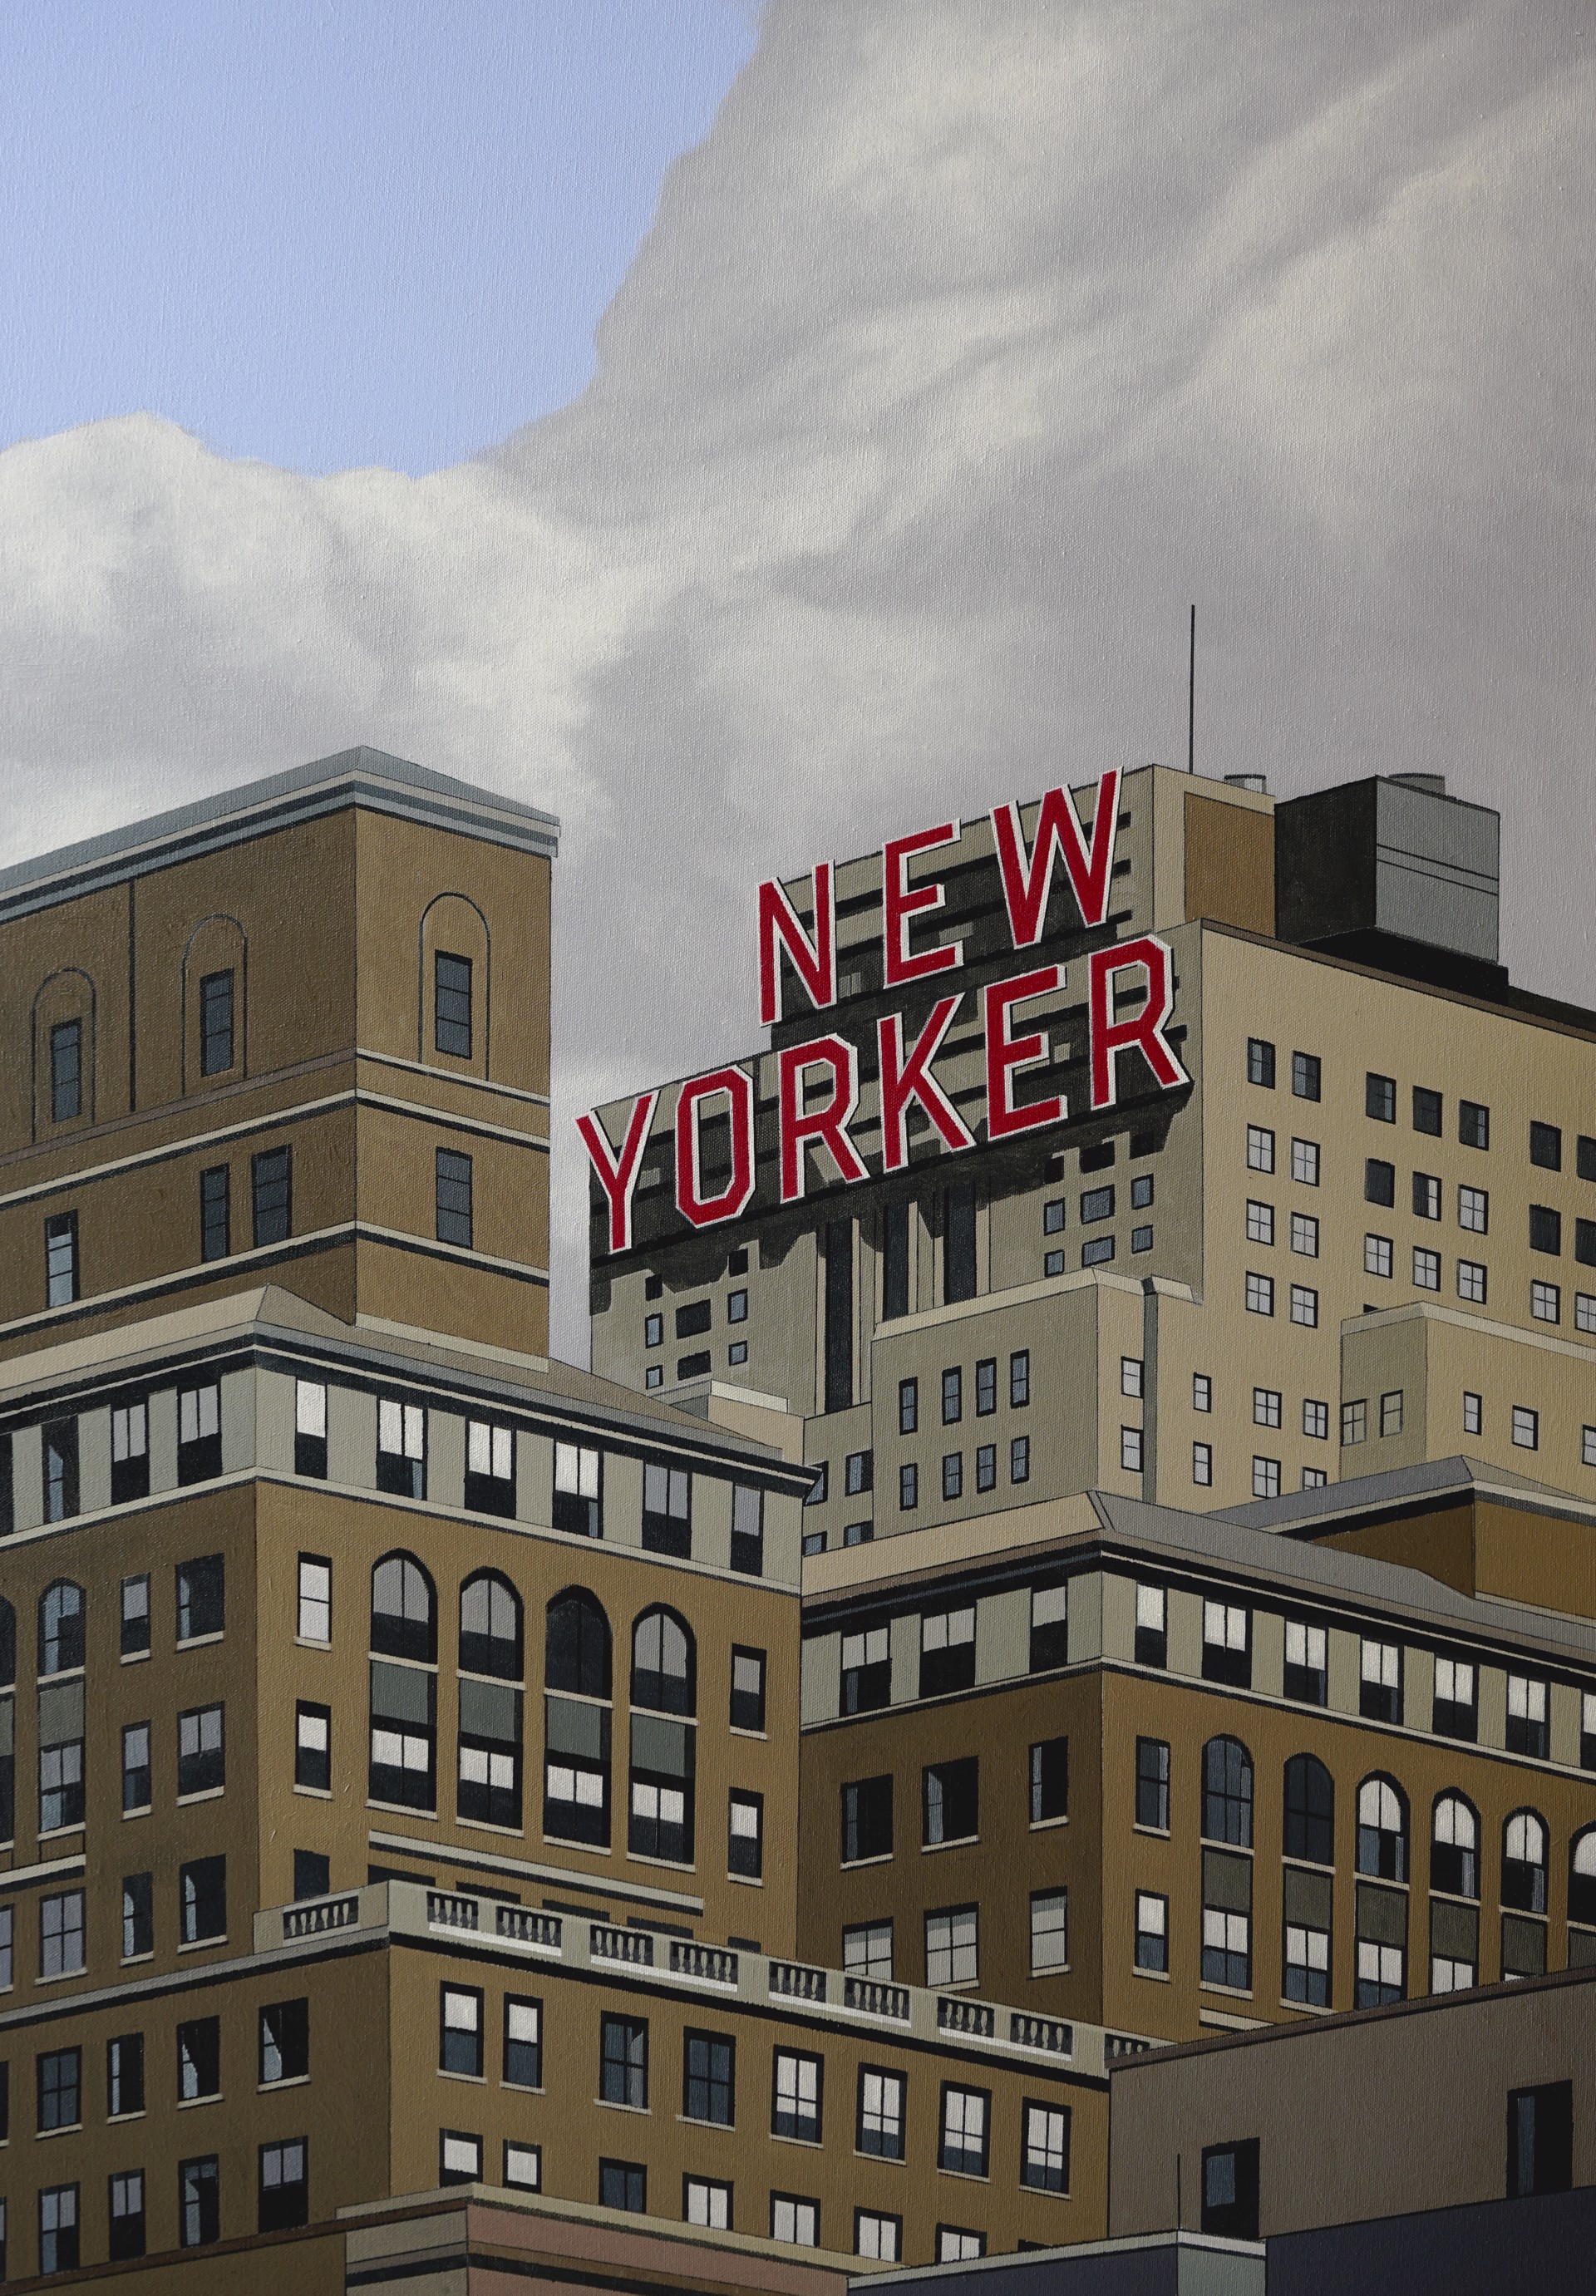 New Yorker by Neil Douglas